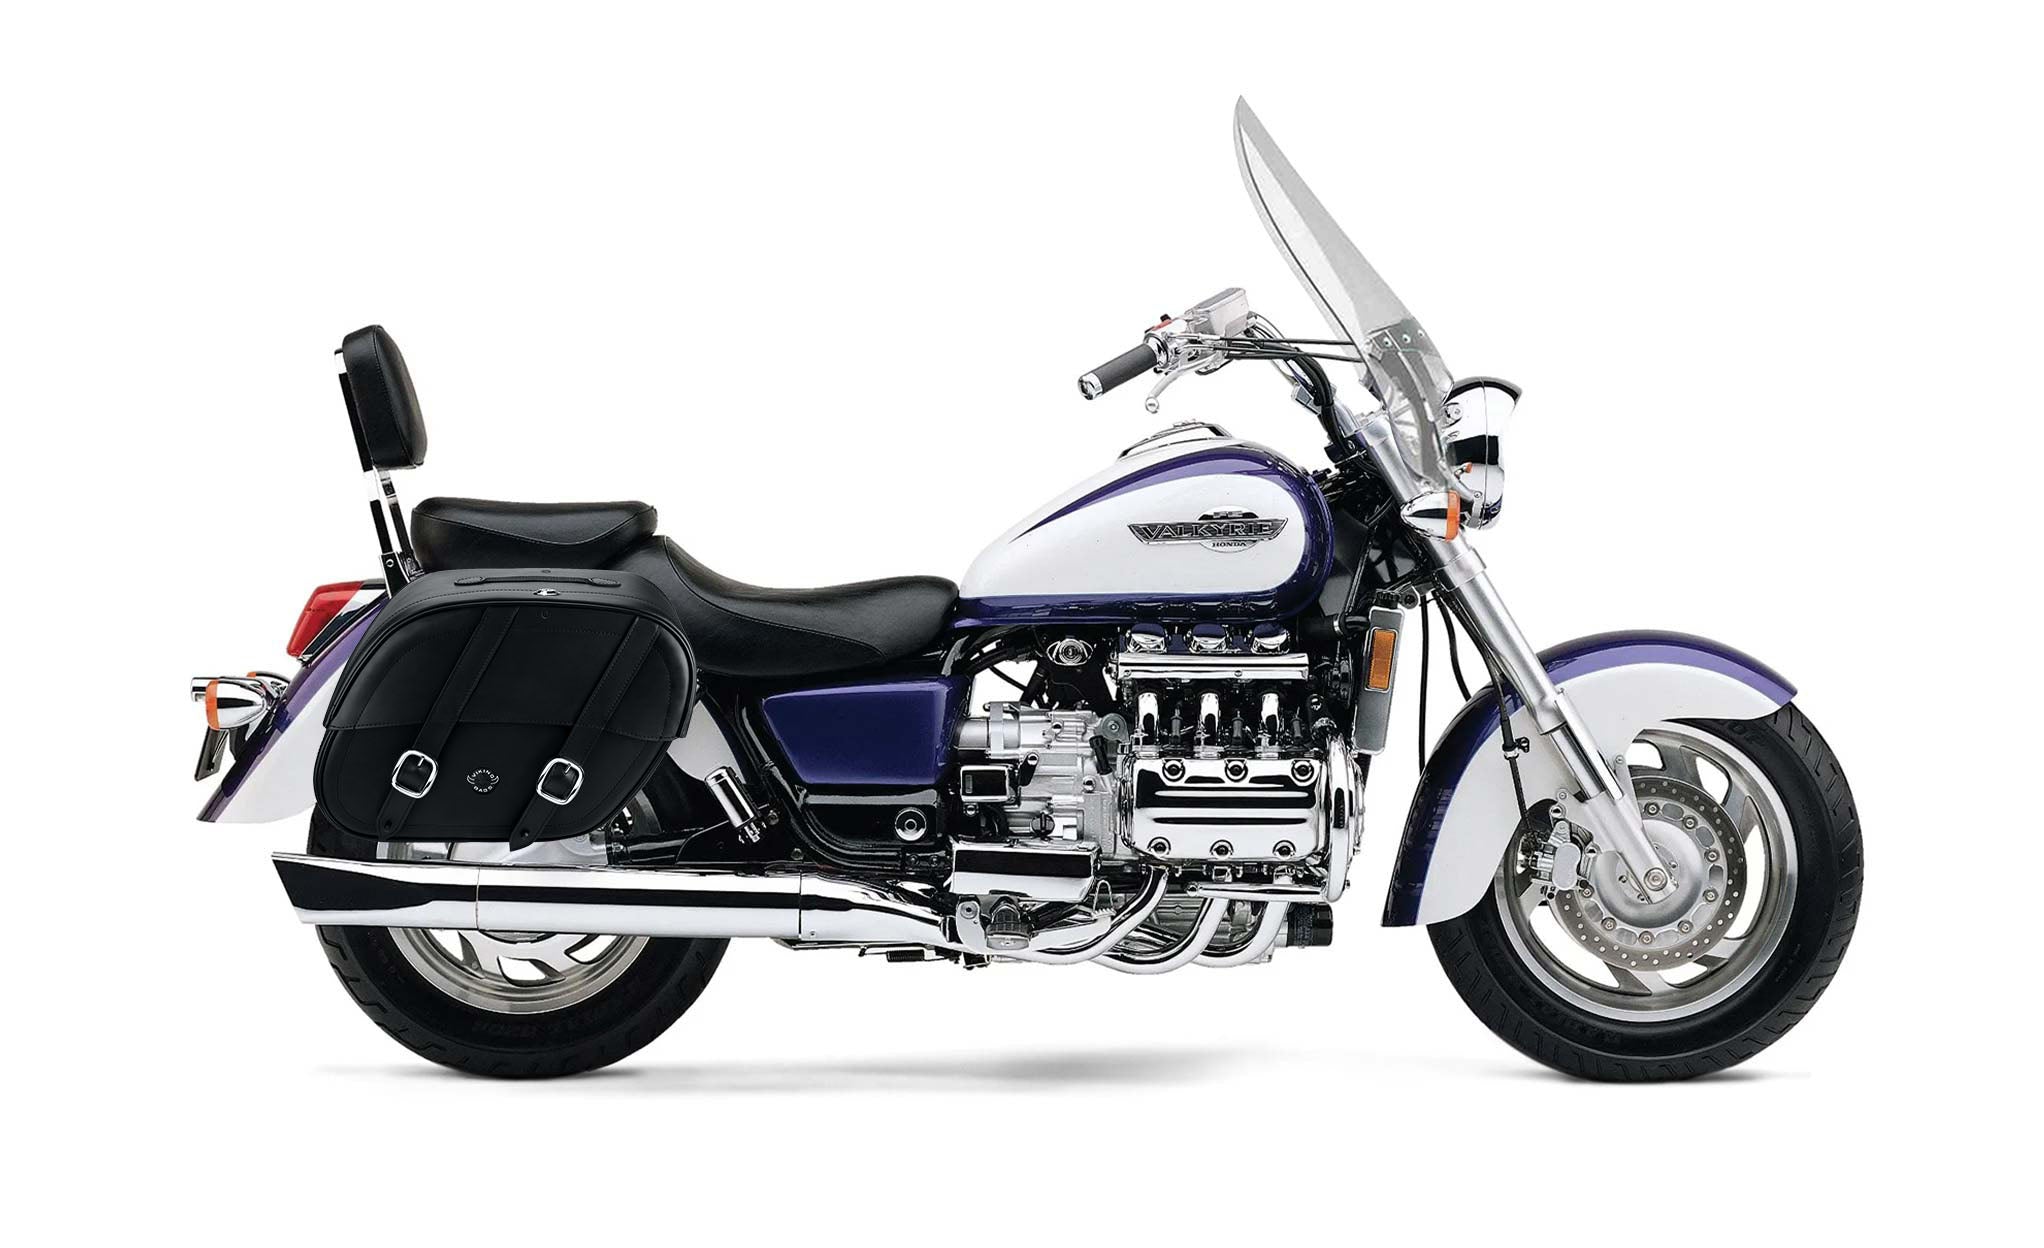 Viking Club Large Honda Valkyrie 1500 Tourer Shock Cut Out Leather Motorcycle Saddlebags on Bike Photo @expand